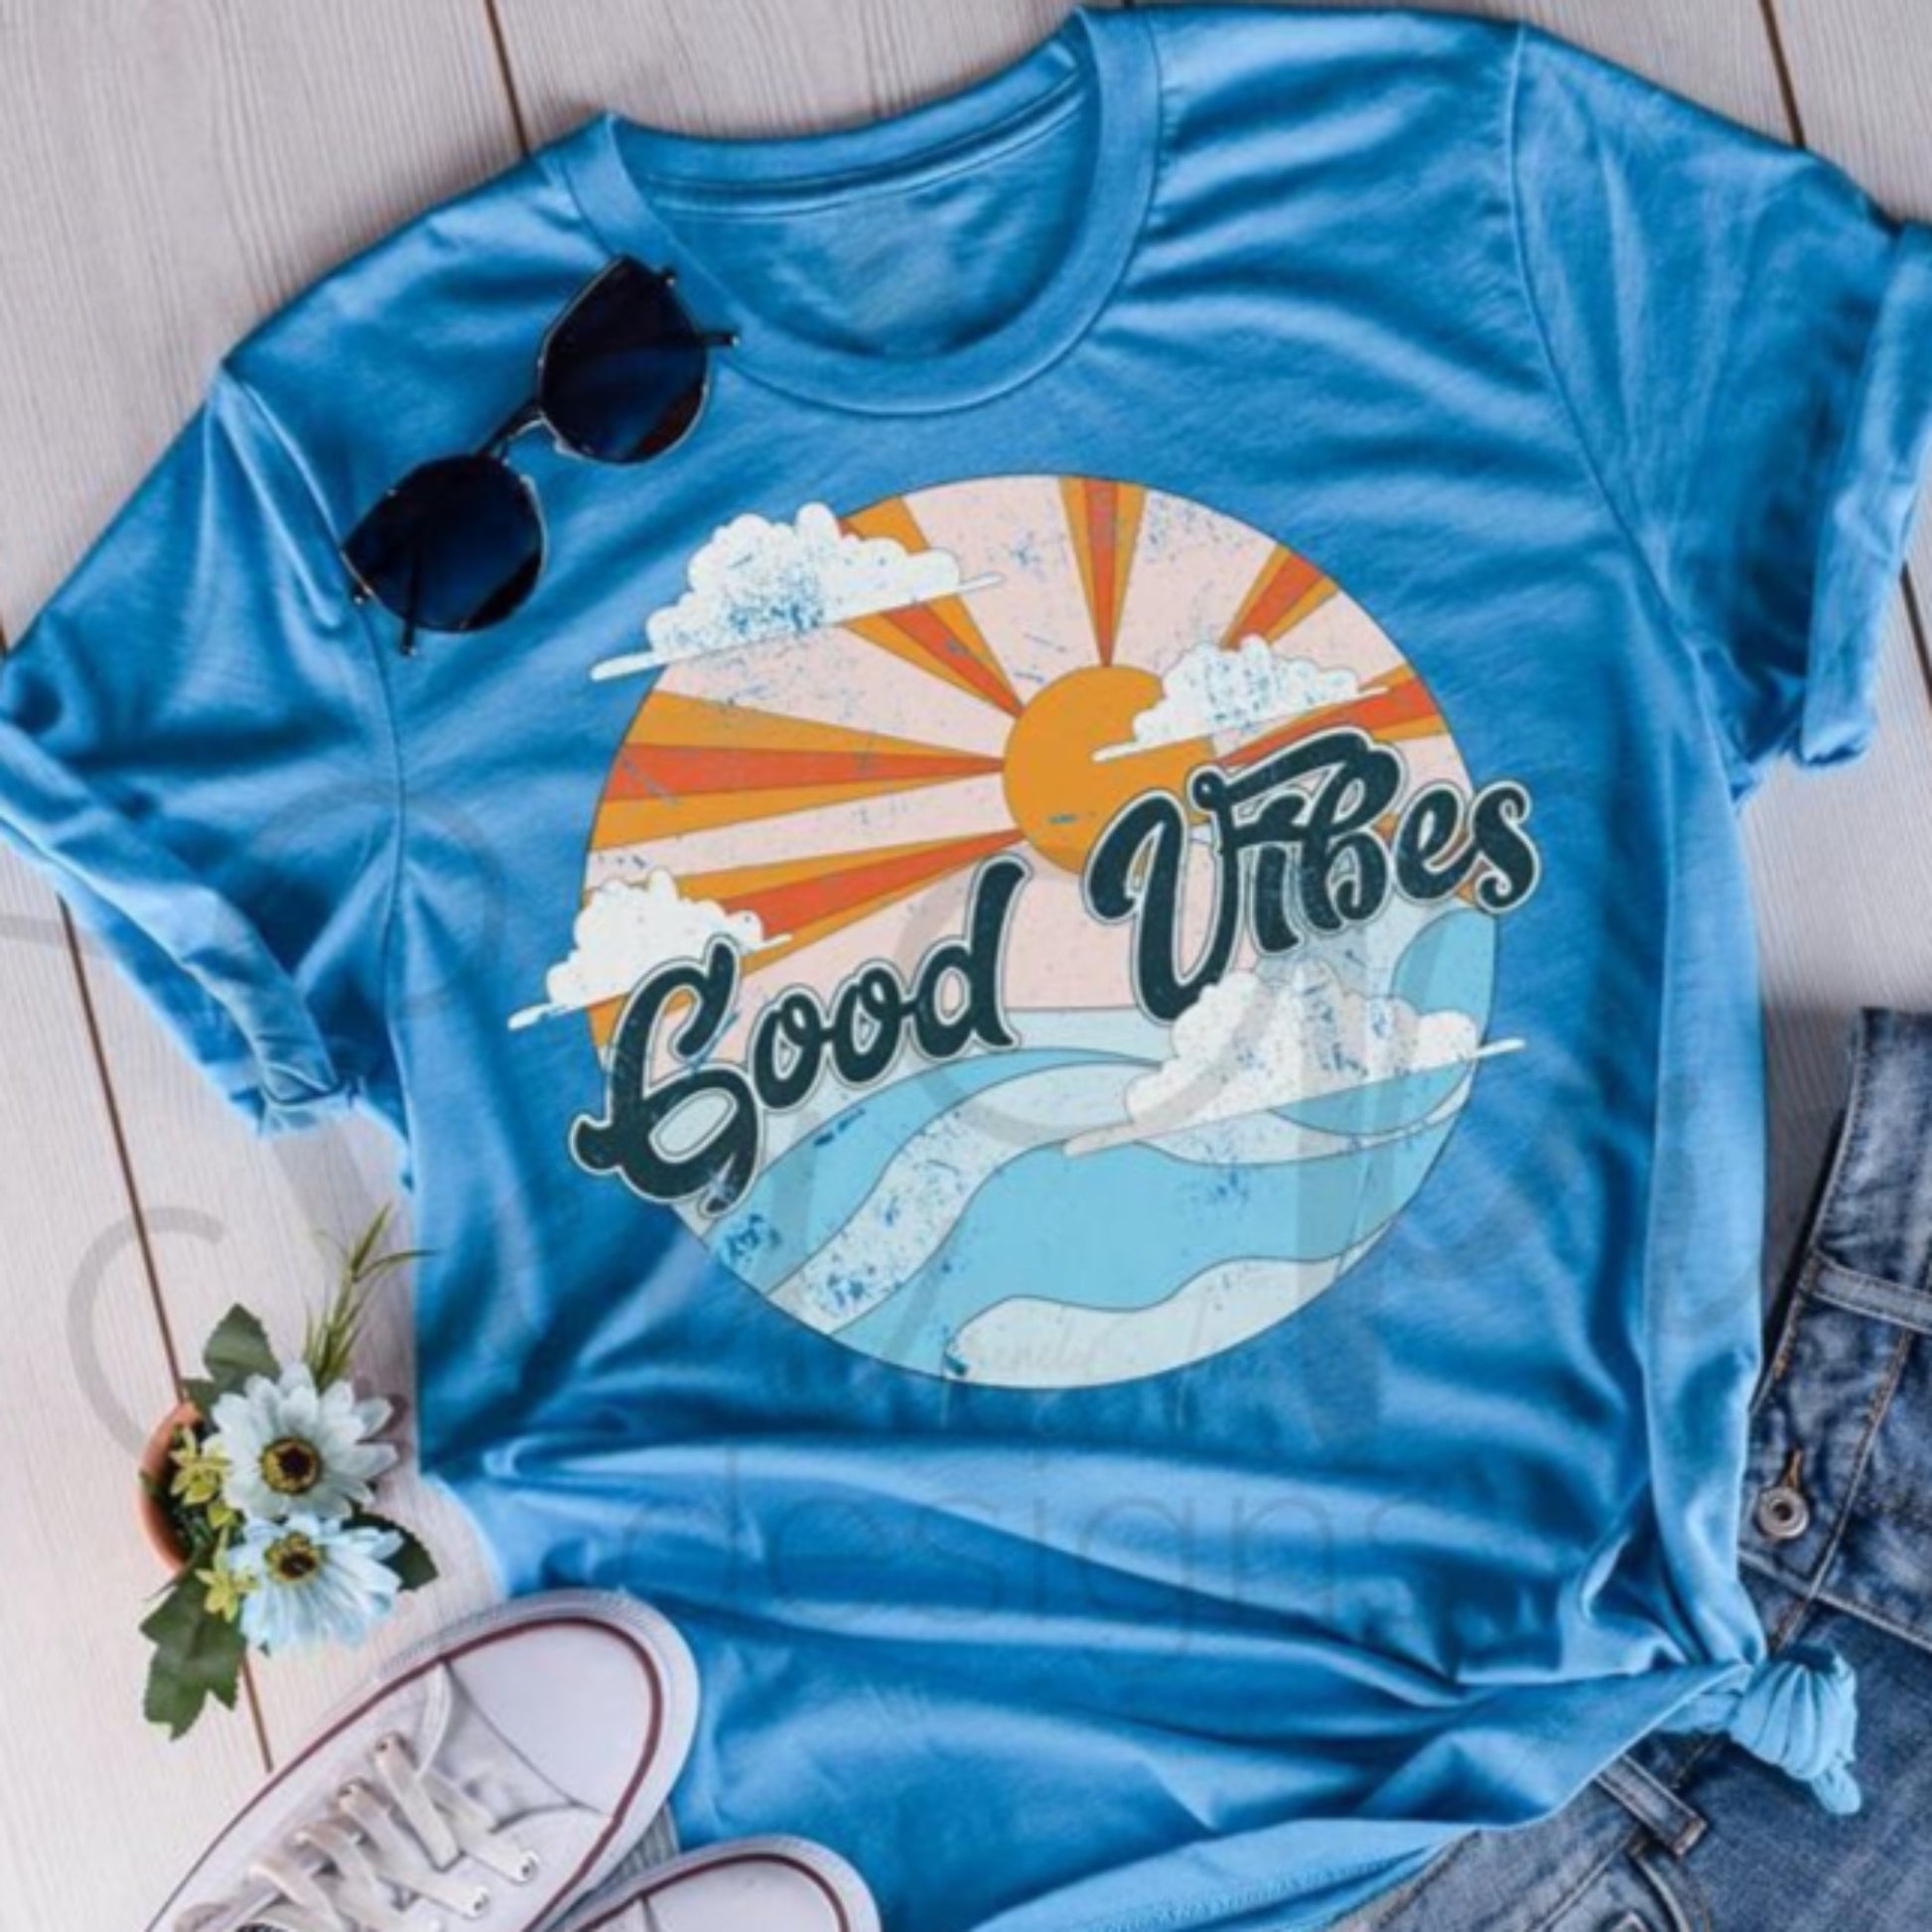 Good Vibes-Shirts-Sea Pine Designs LLC